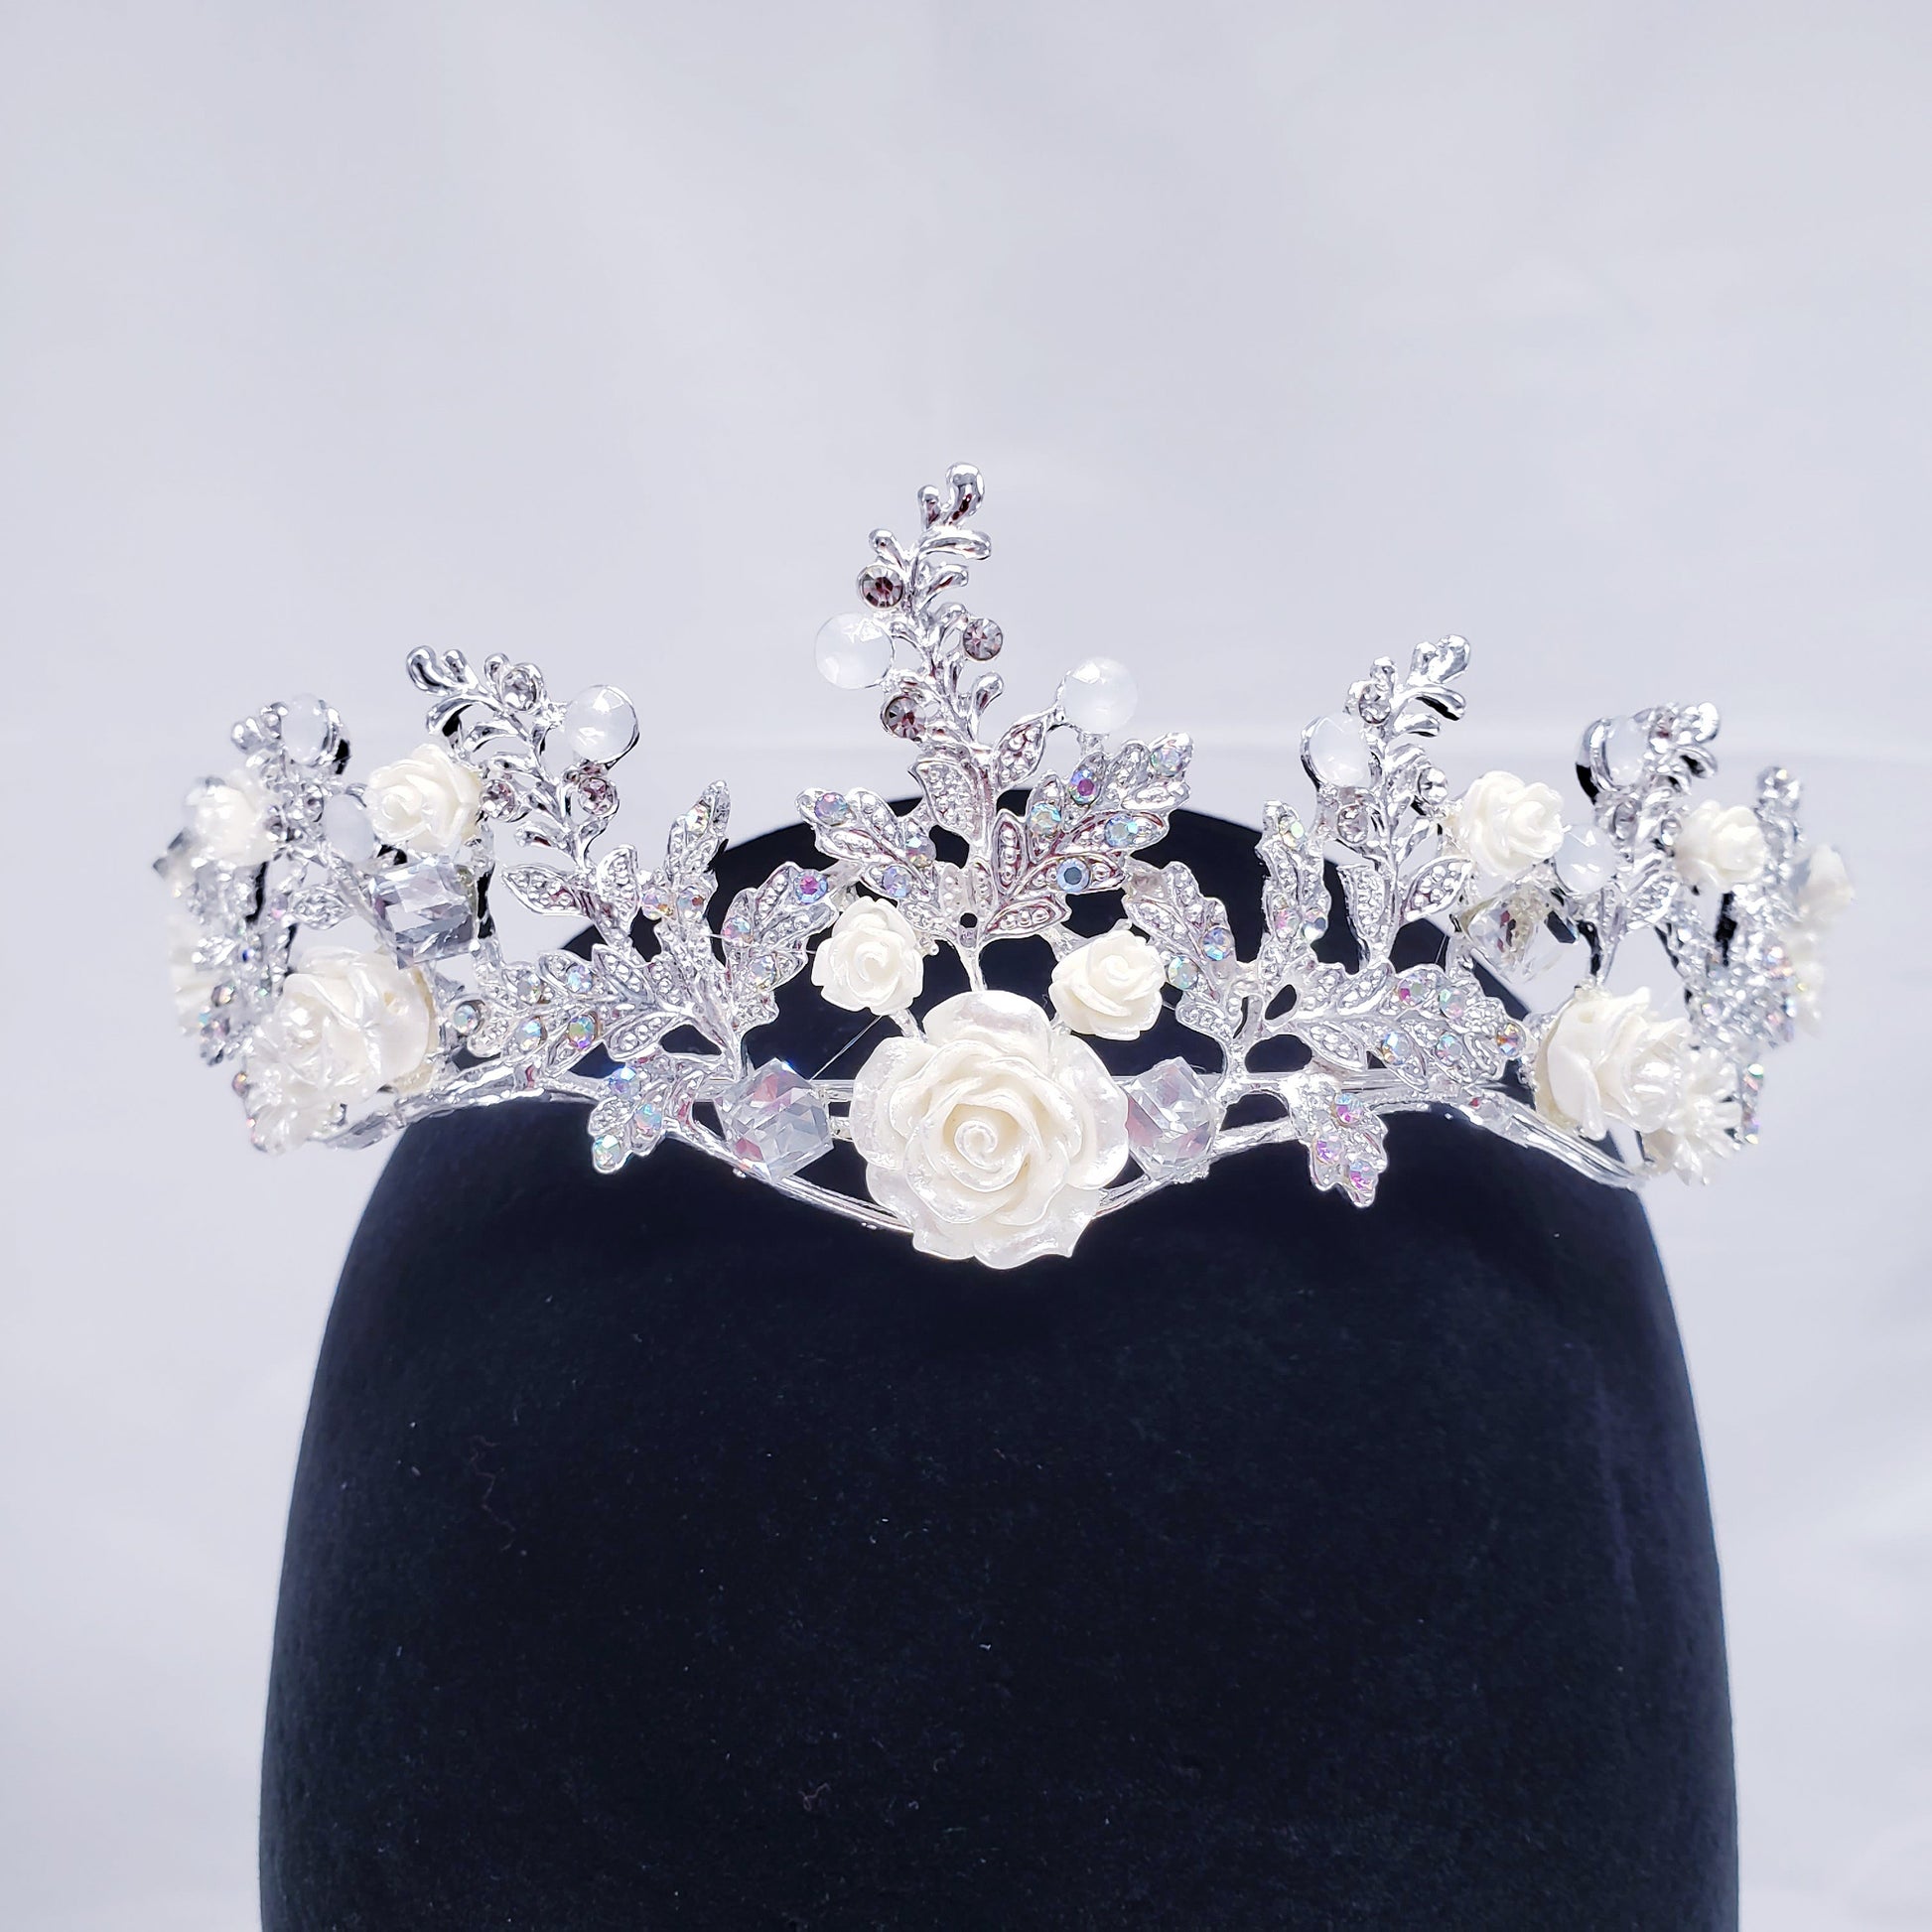 Floral white silver Tiara Crown Detailed Princess Queen cosplay diadem crystal real metal